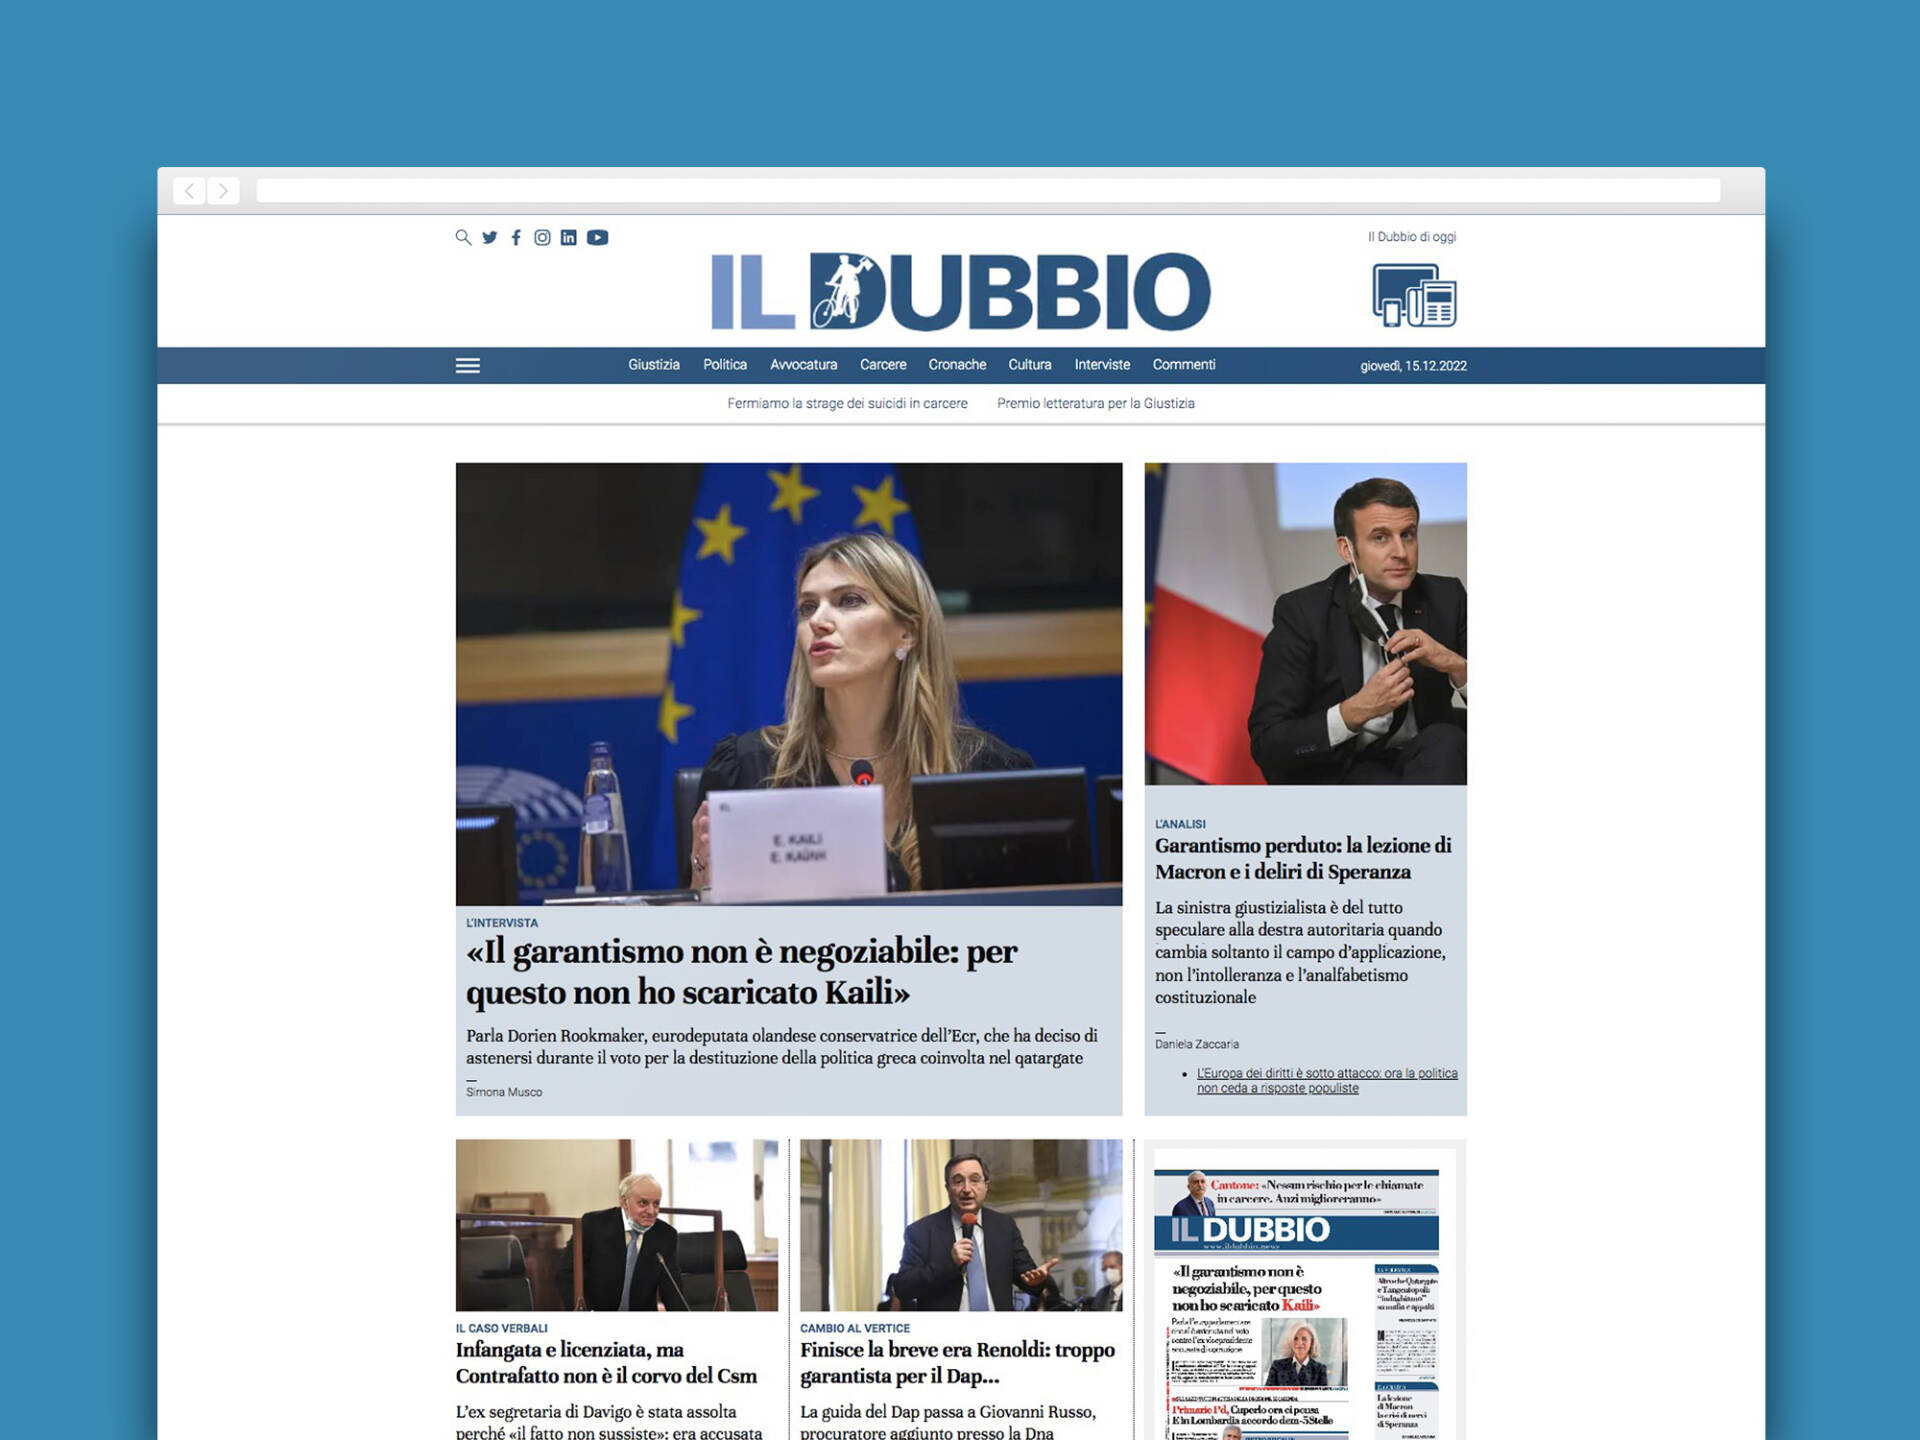 Il_Dubbio-web-Wenceslau-News-Design-02